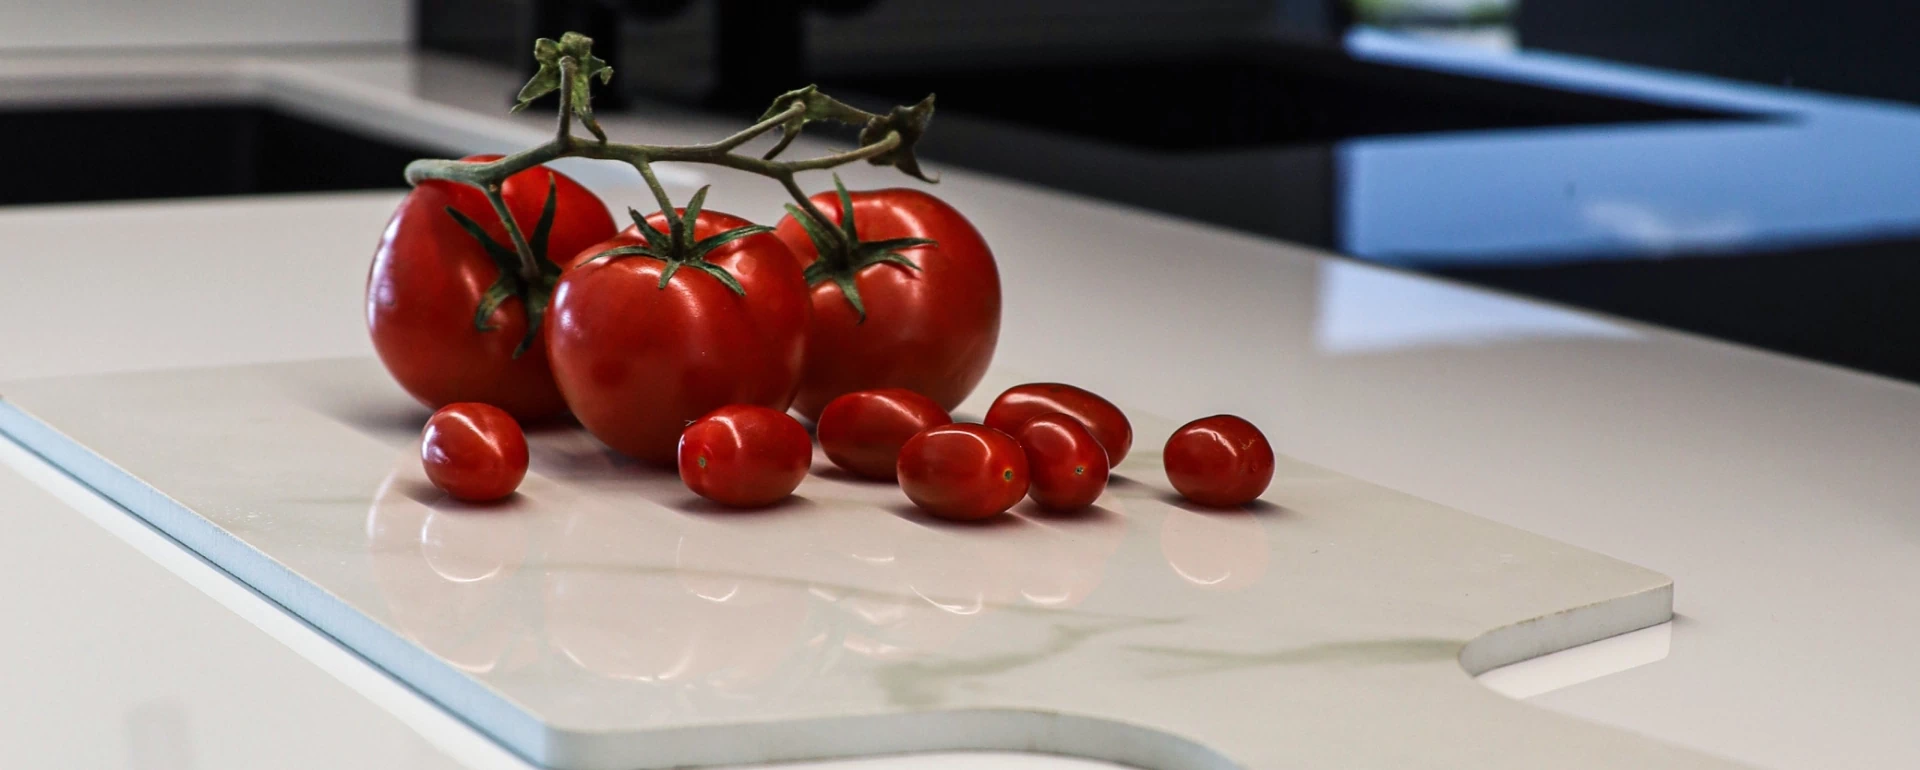 pomidory na kamiennej desce